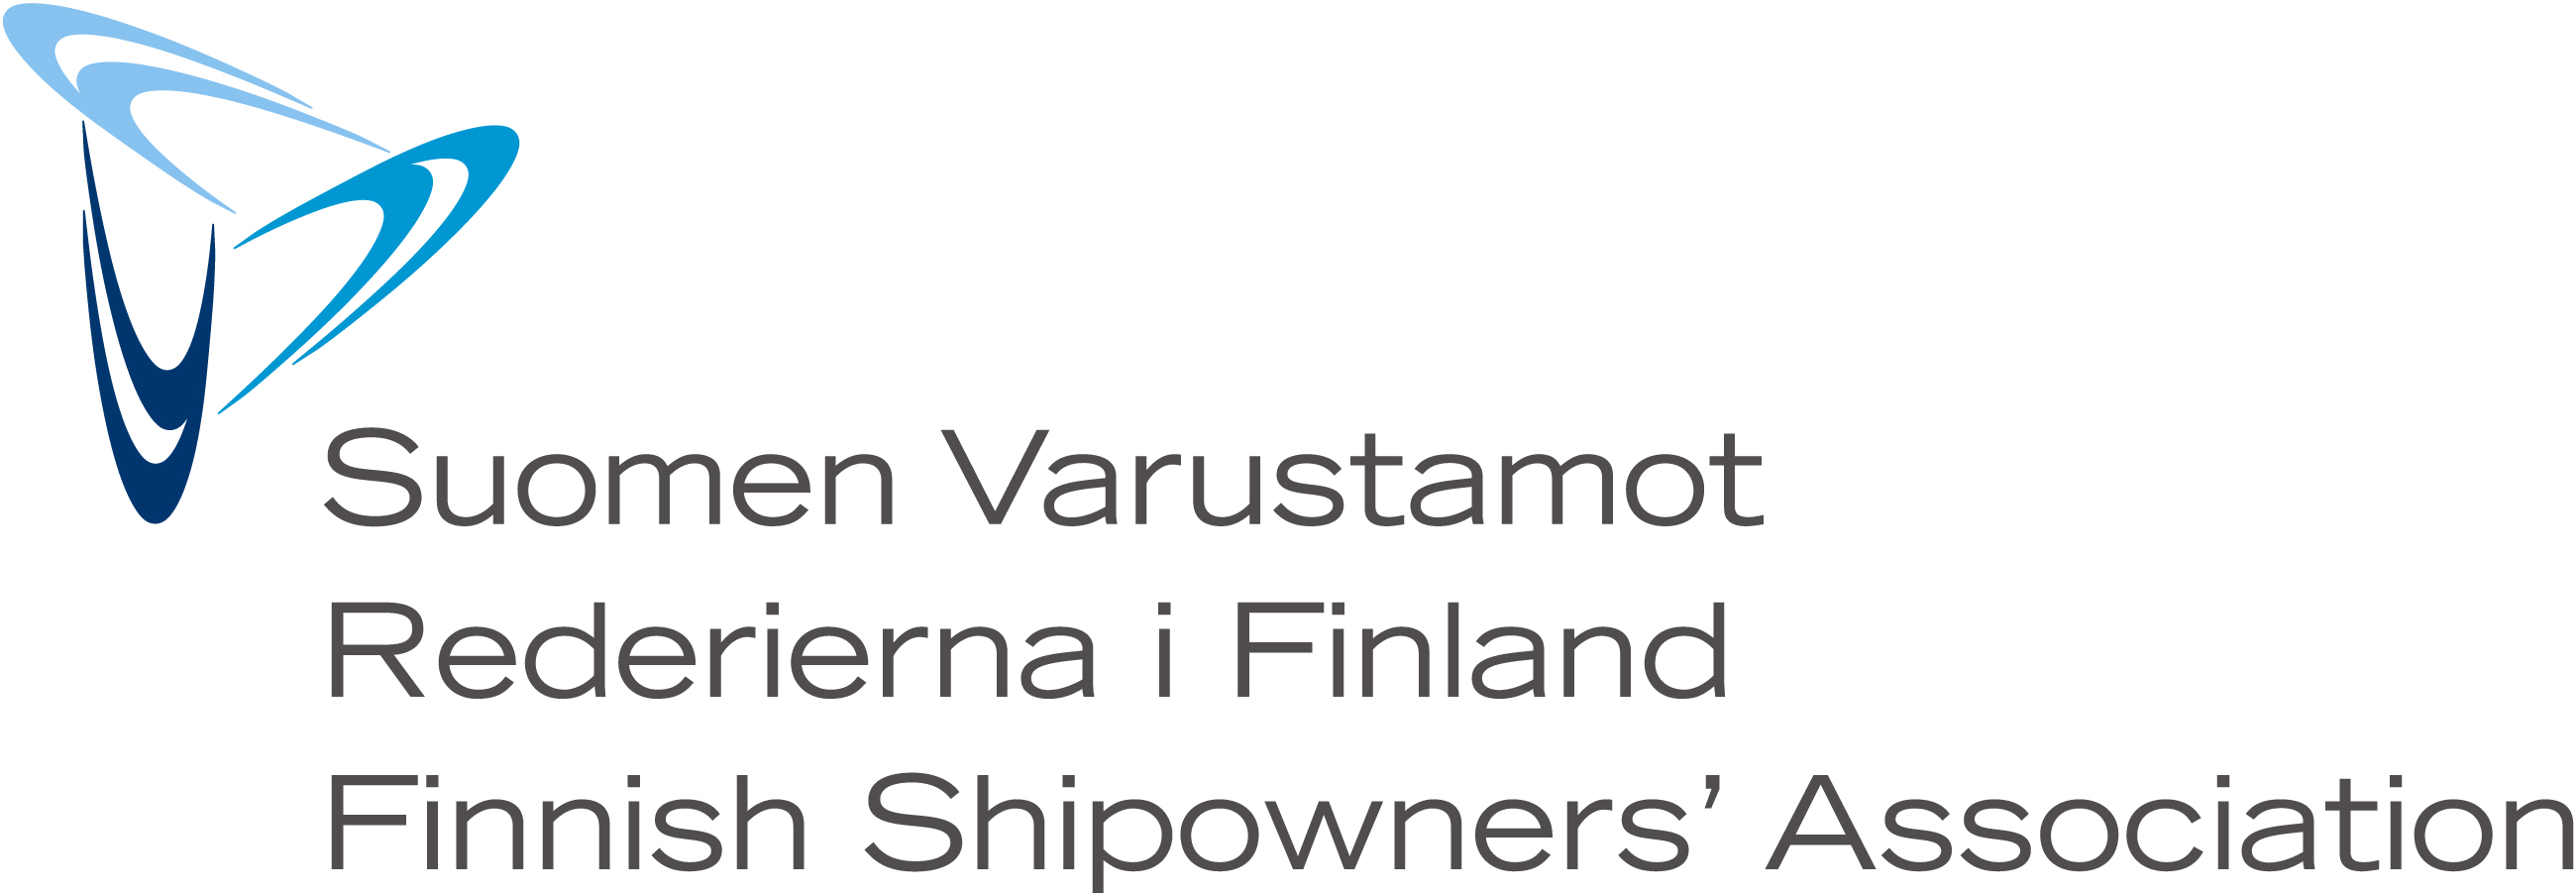 Finnish Shipowners' Association